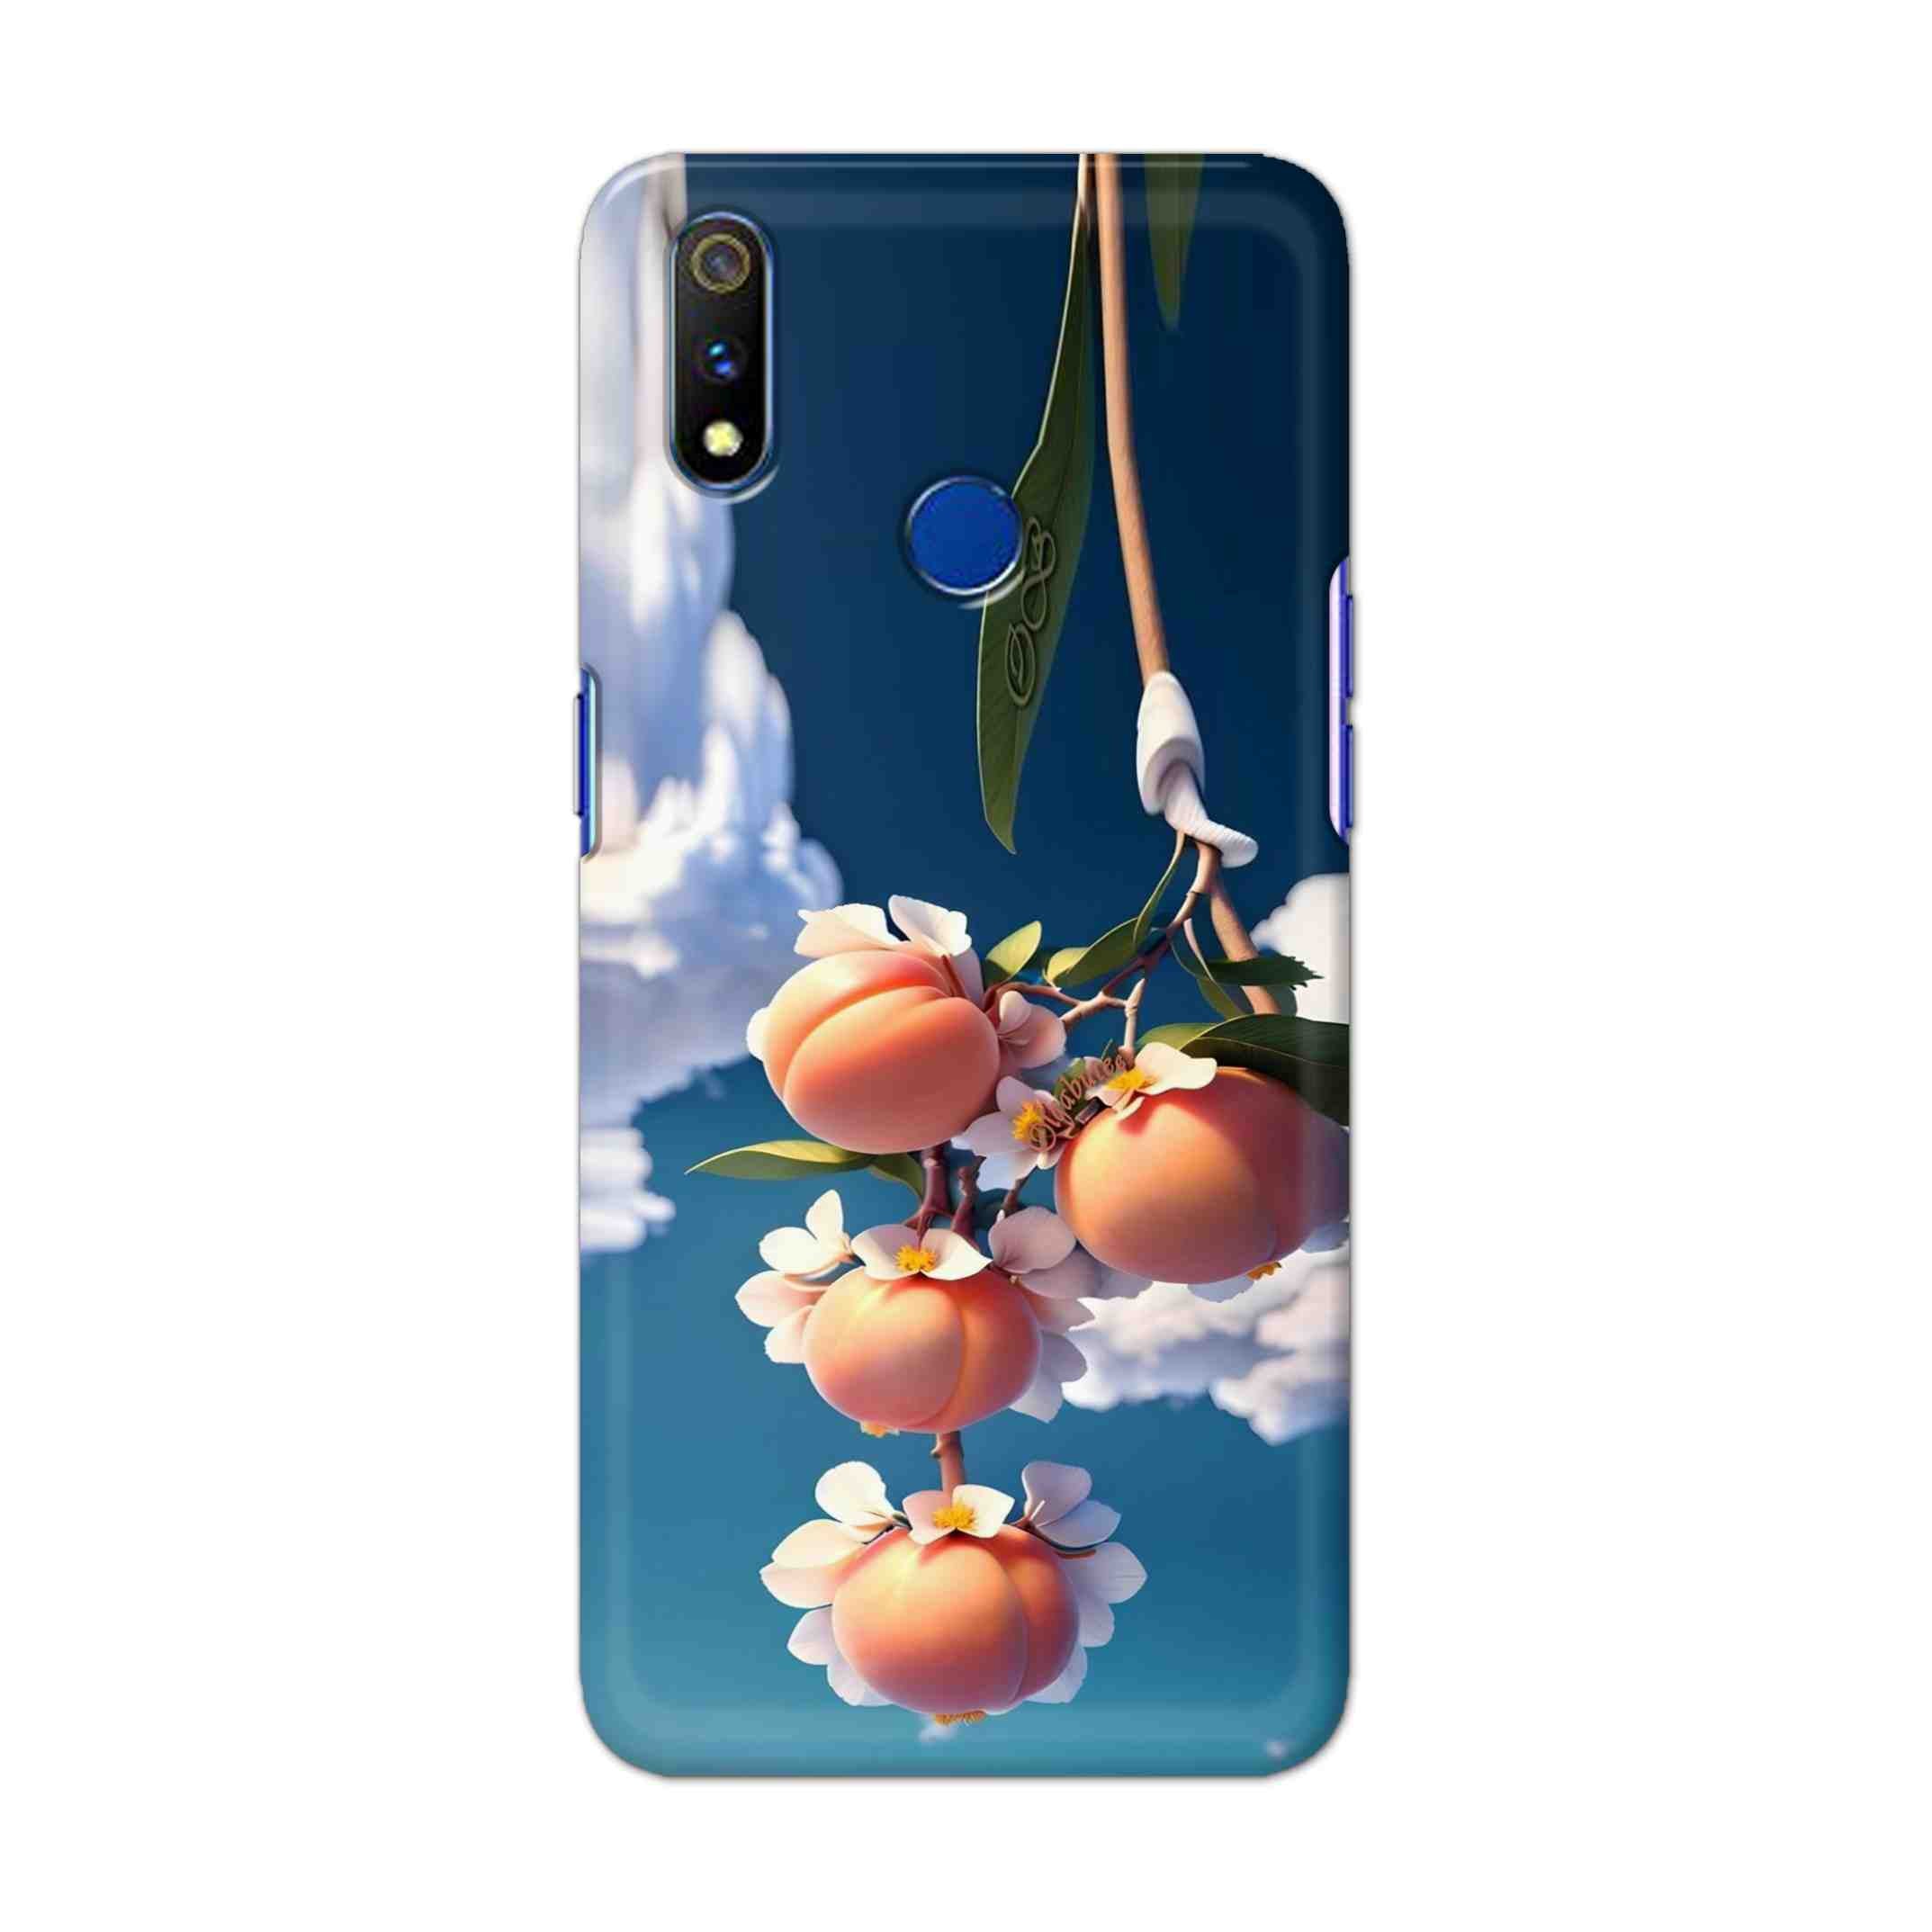 Buy Fruit Hard Back Mobile Phone Case Cover For Realme 3 Pro Online